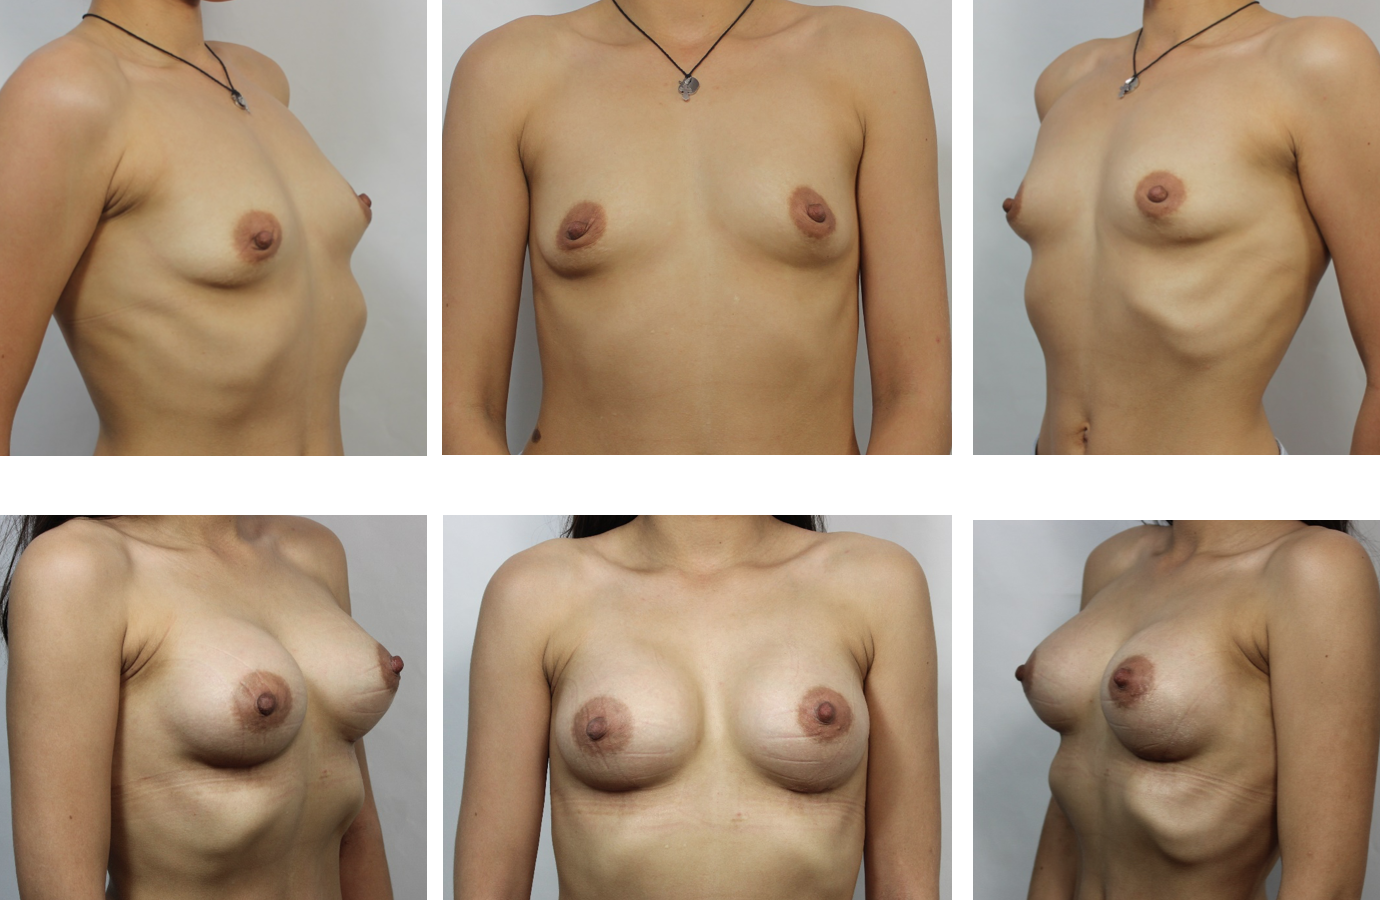 виды форм груди женщин фото 69